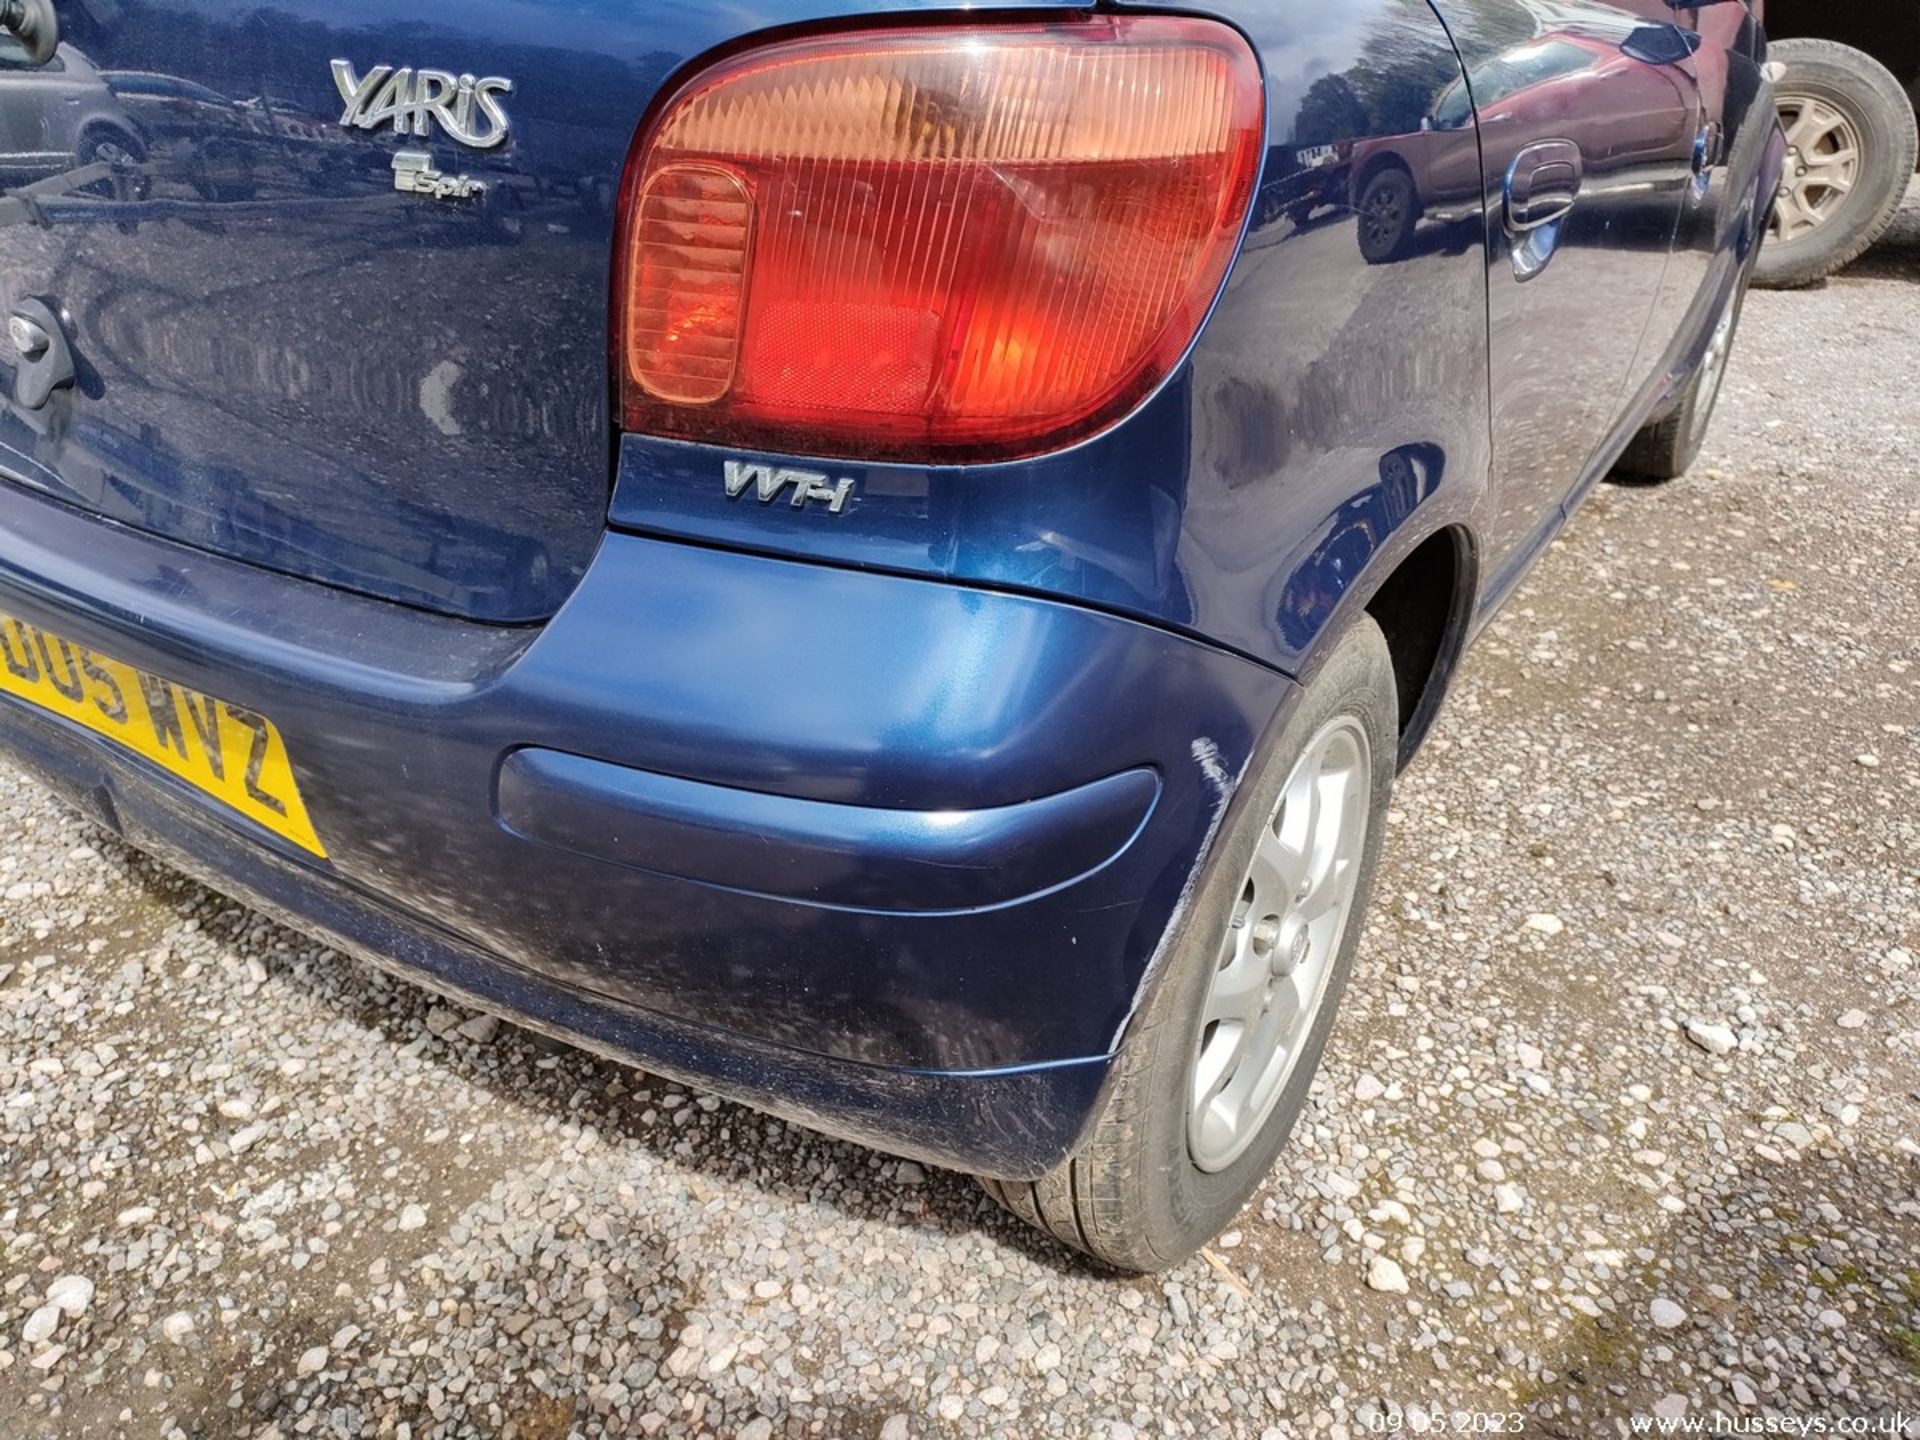 05/05 TOYOTA YARIS T SPIRIT - 998cc 5dr Hatchback (Blue) - Image 20 of 34